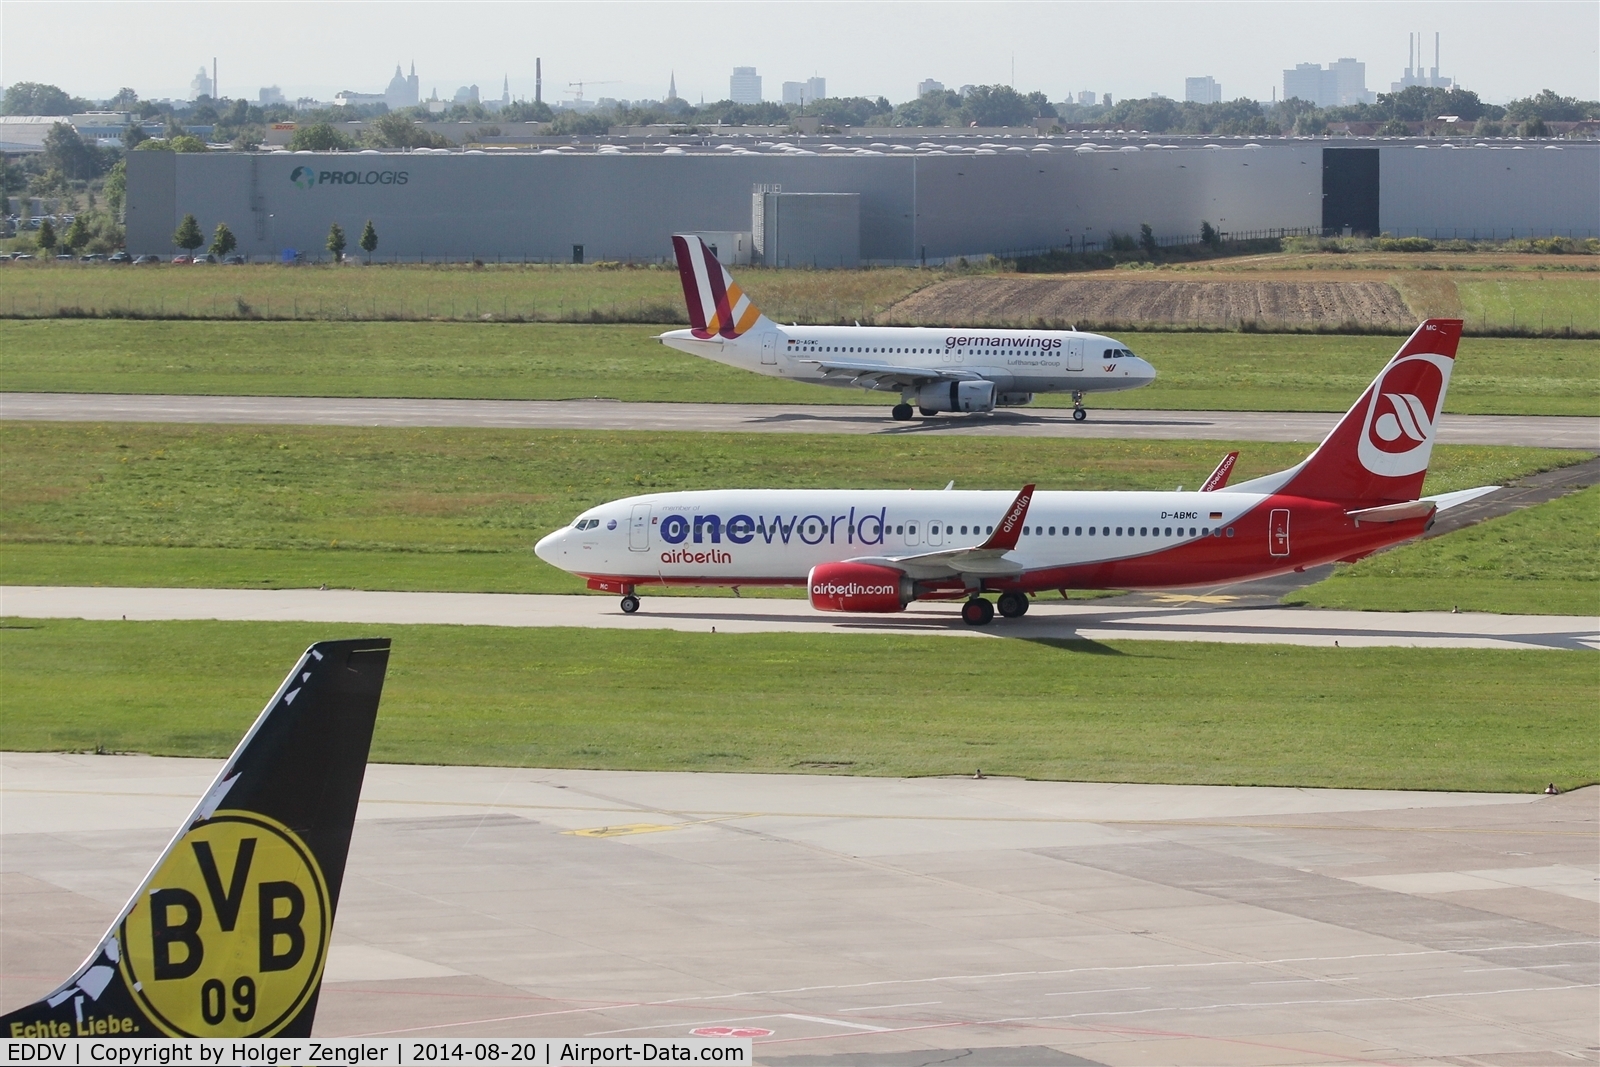 Hanover/Langenhagen International Airport, Hanover Germany (EDDV) - Standing - taxiing - rolling out.....